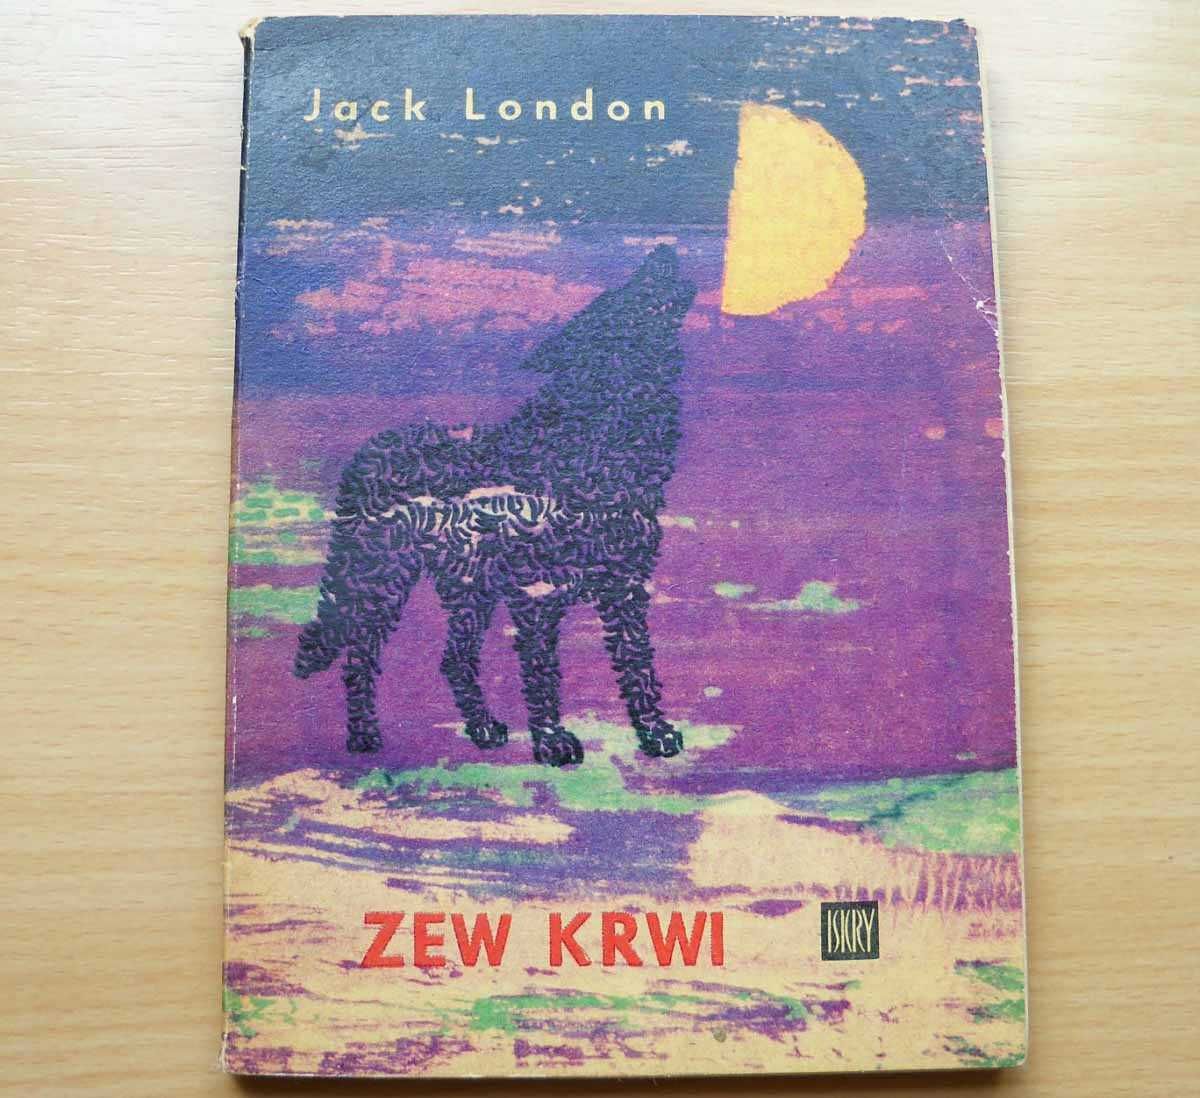 Zew krwi - Jack London - 1966